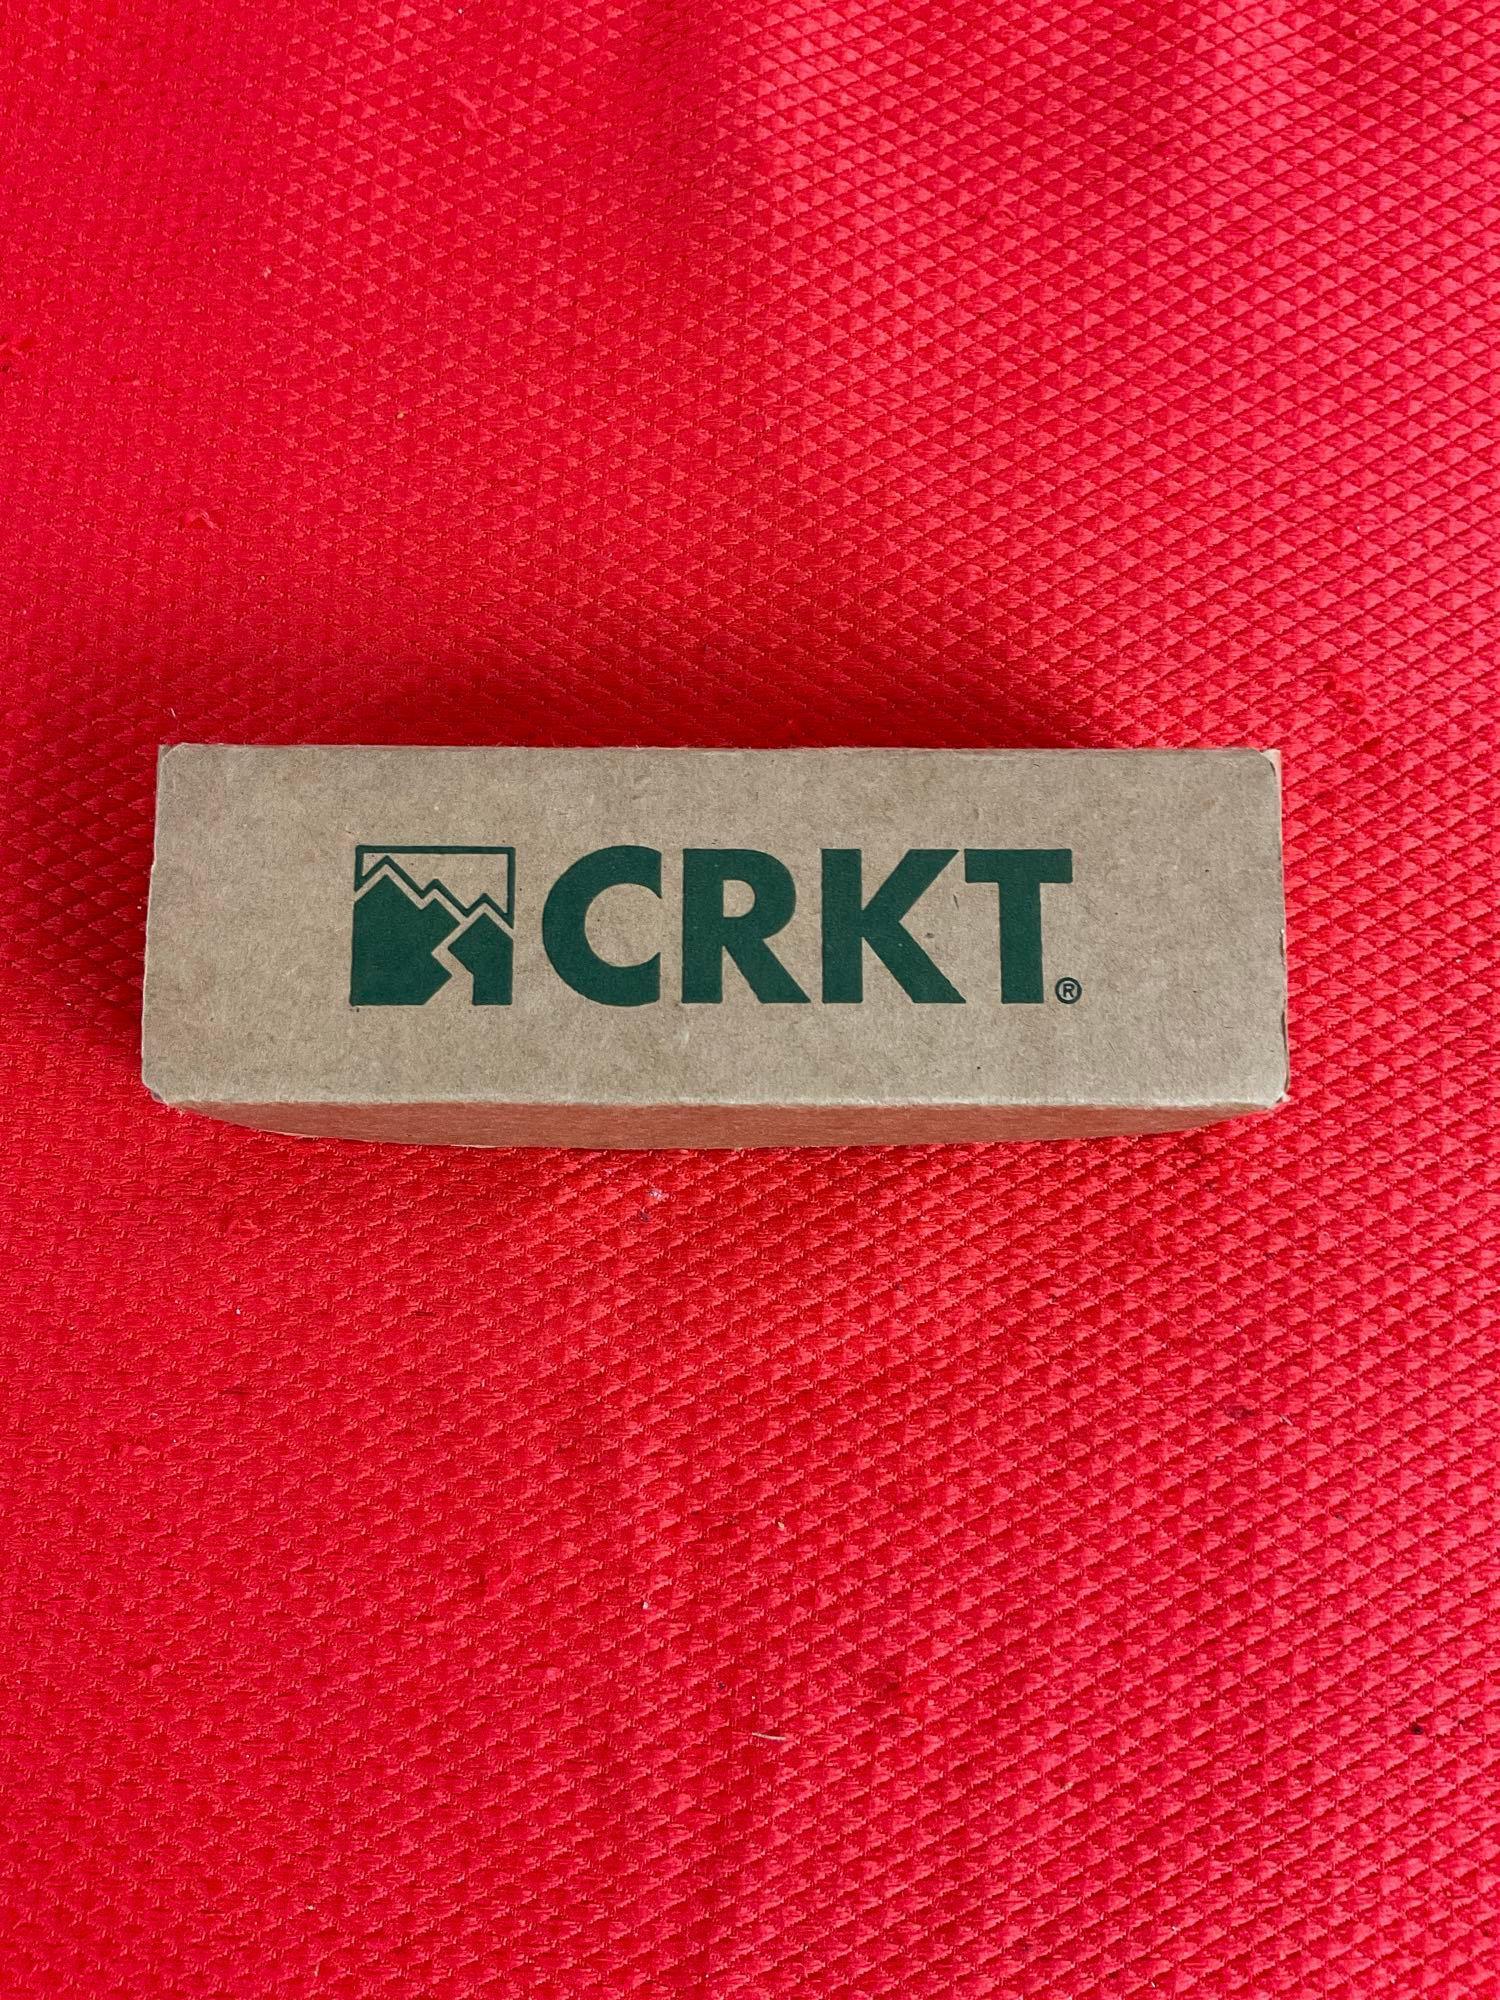 CRKT Klecker NIRK NOVO 2.75" 420J2 Steel Folding Knife w/ Brushed Frame Model 5175. NIB. See pics.